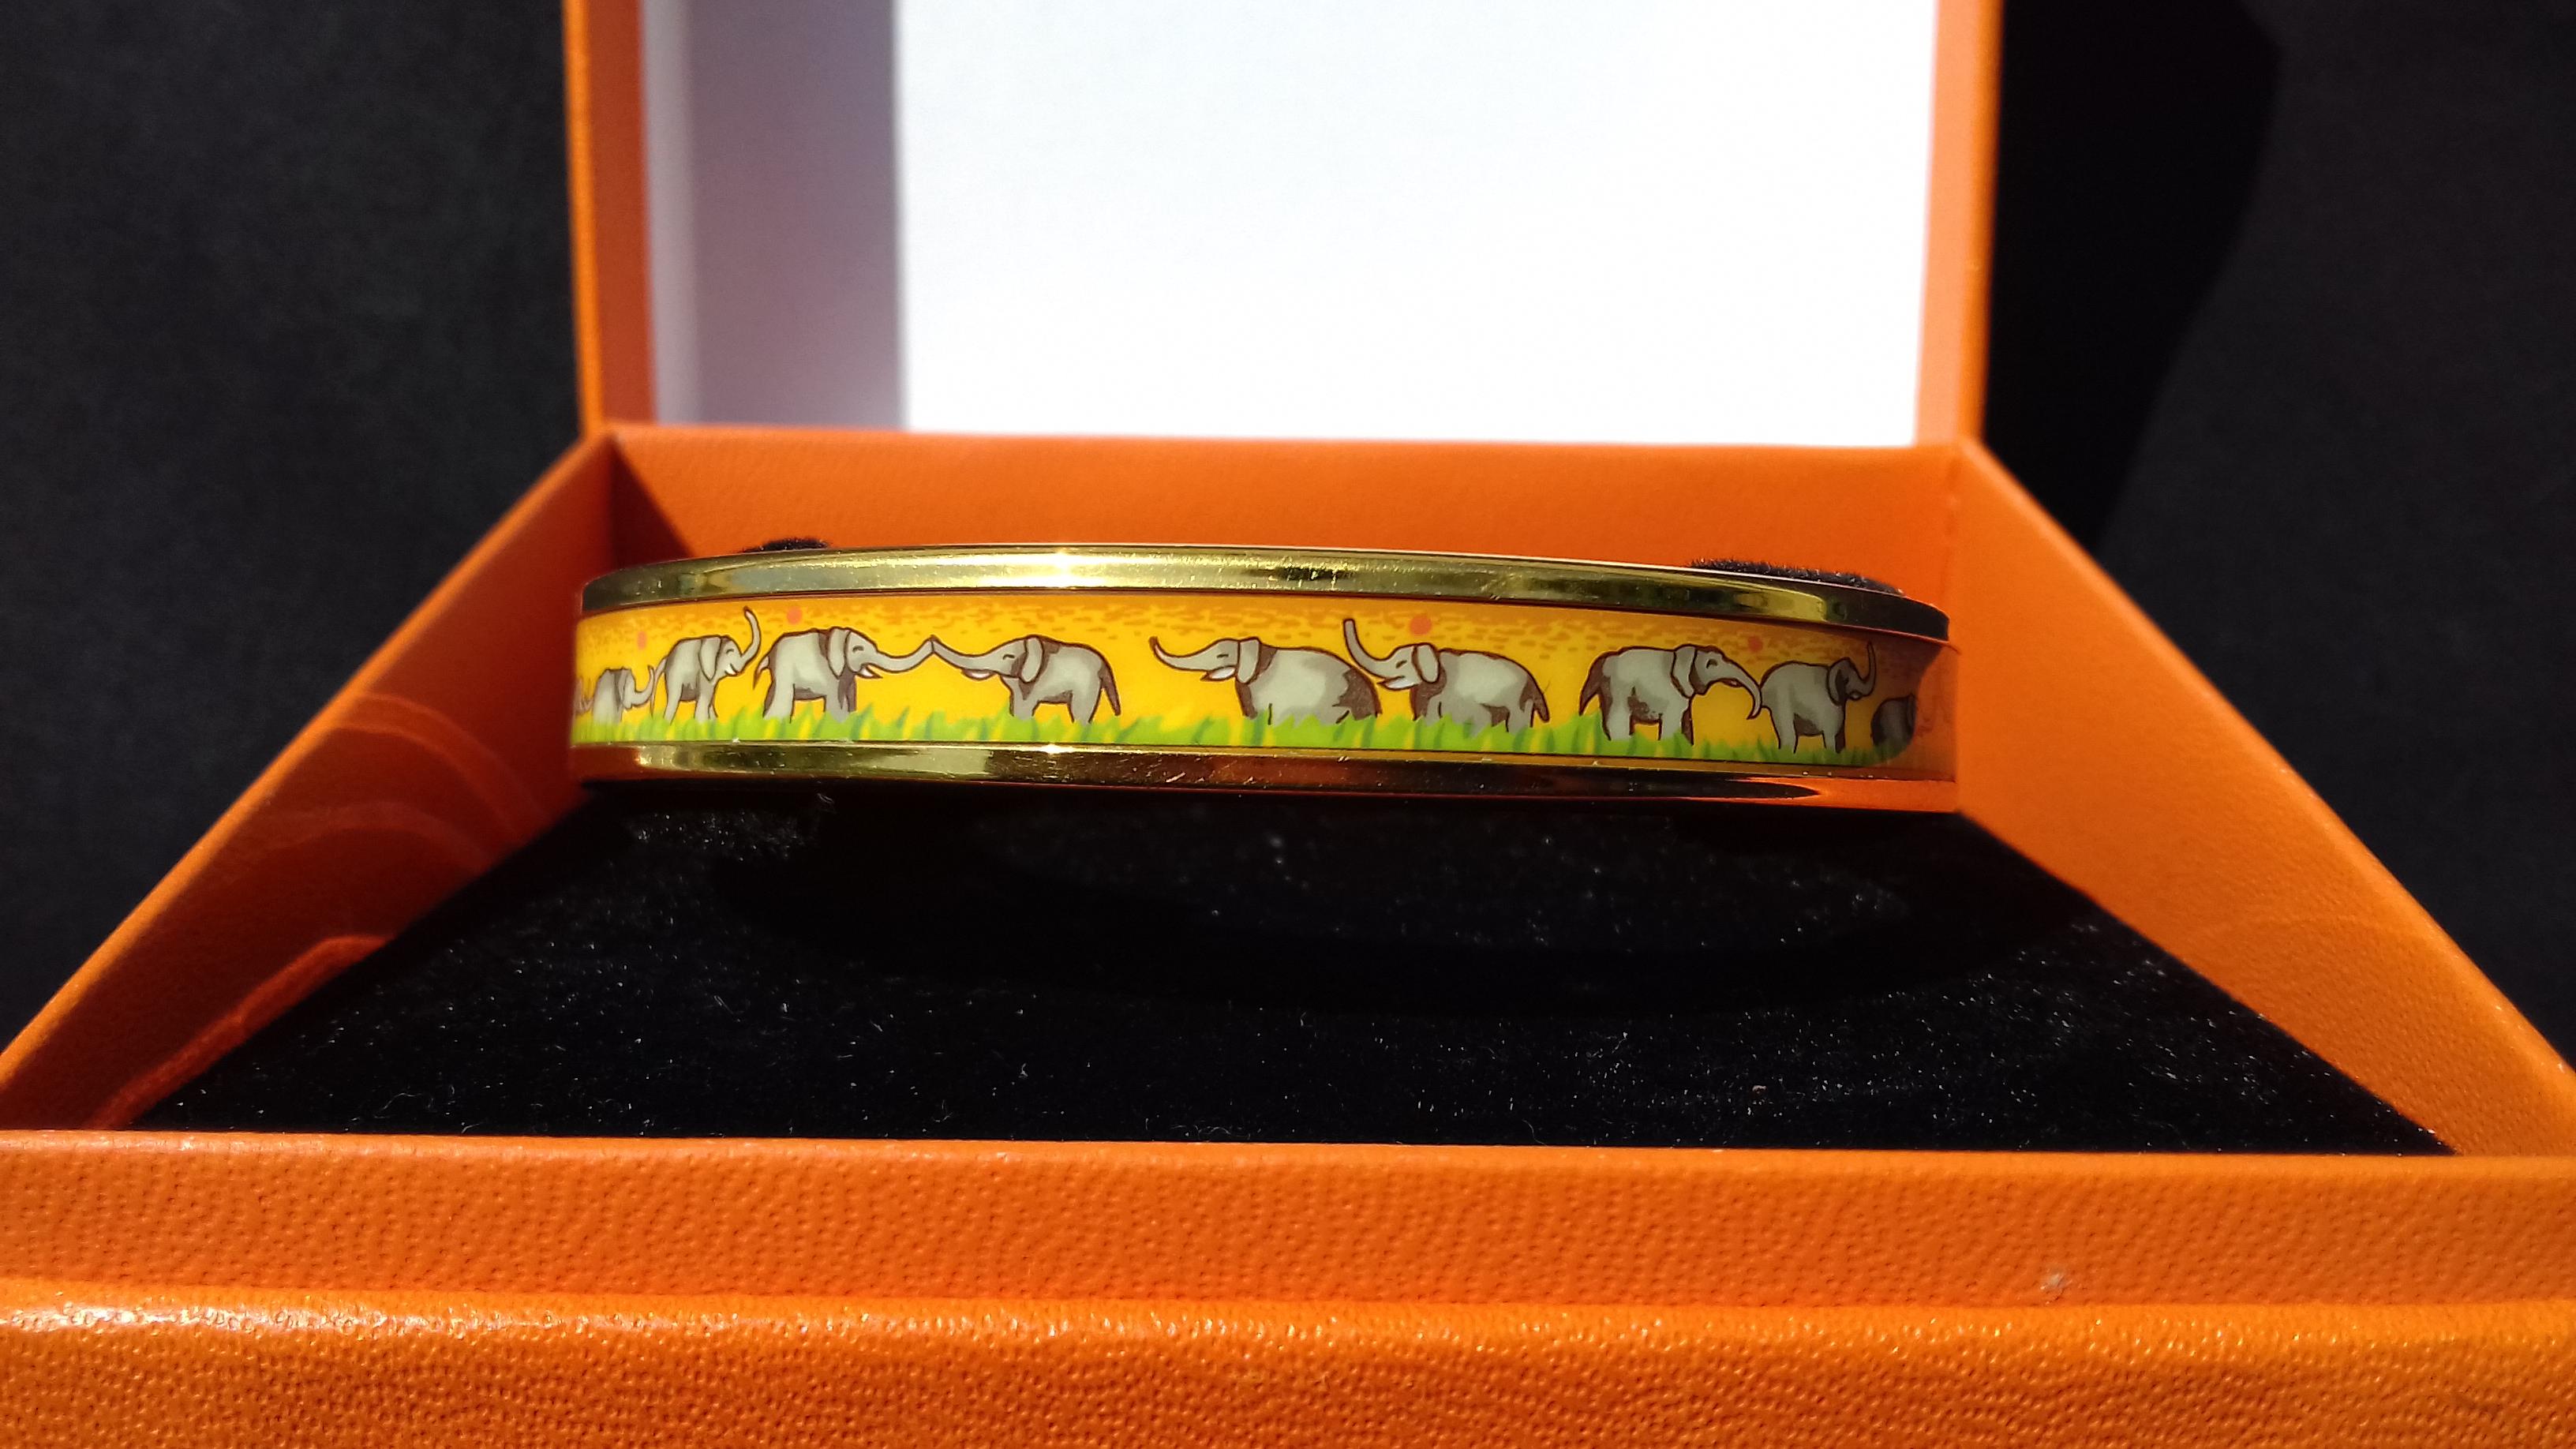 Hermès Enamel Printed Bracelet Elephants Grazing Yellow Ghw Narrow Size 65 6